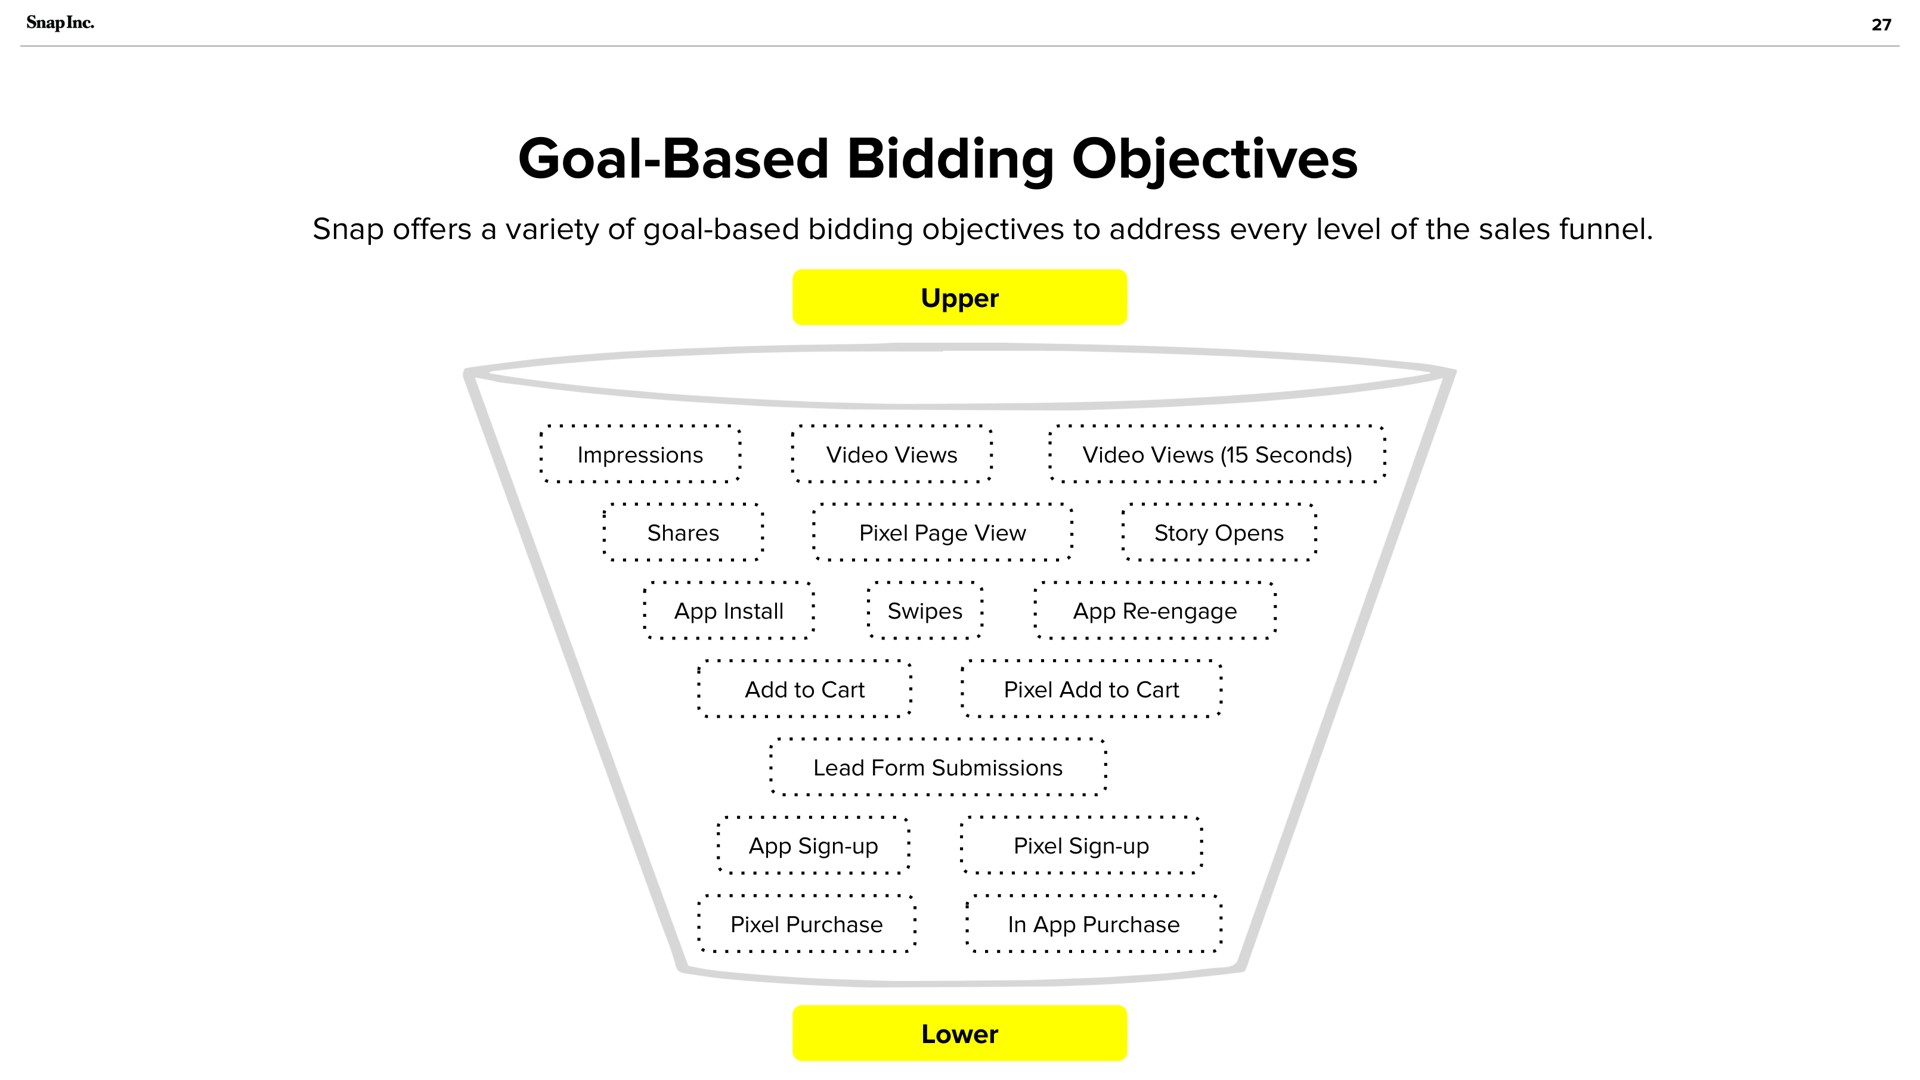 goal based bidding objectives | Snap Inc